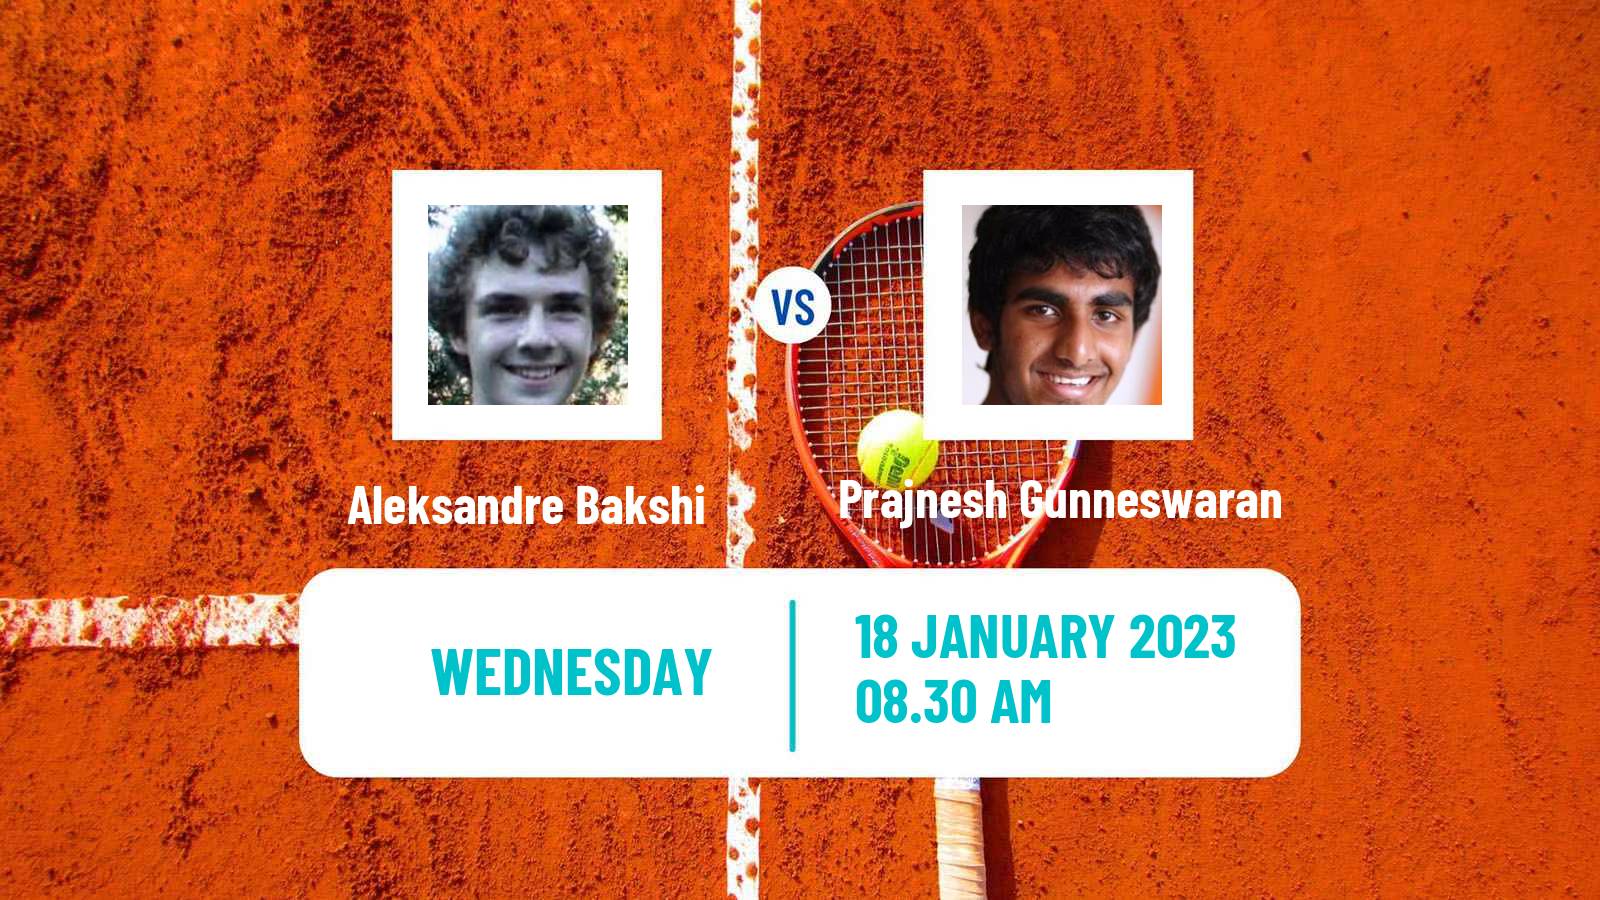 Tennis ITF Tournaments Aleksandre Bakshi - Prajnesh Gunneswaran